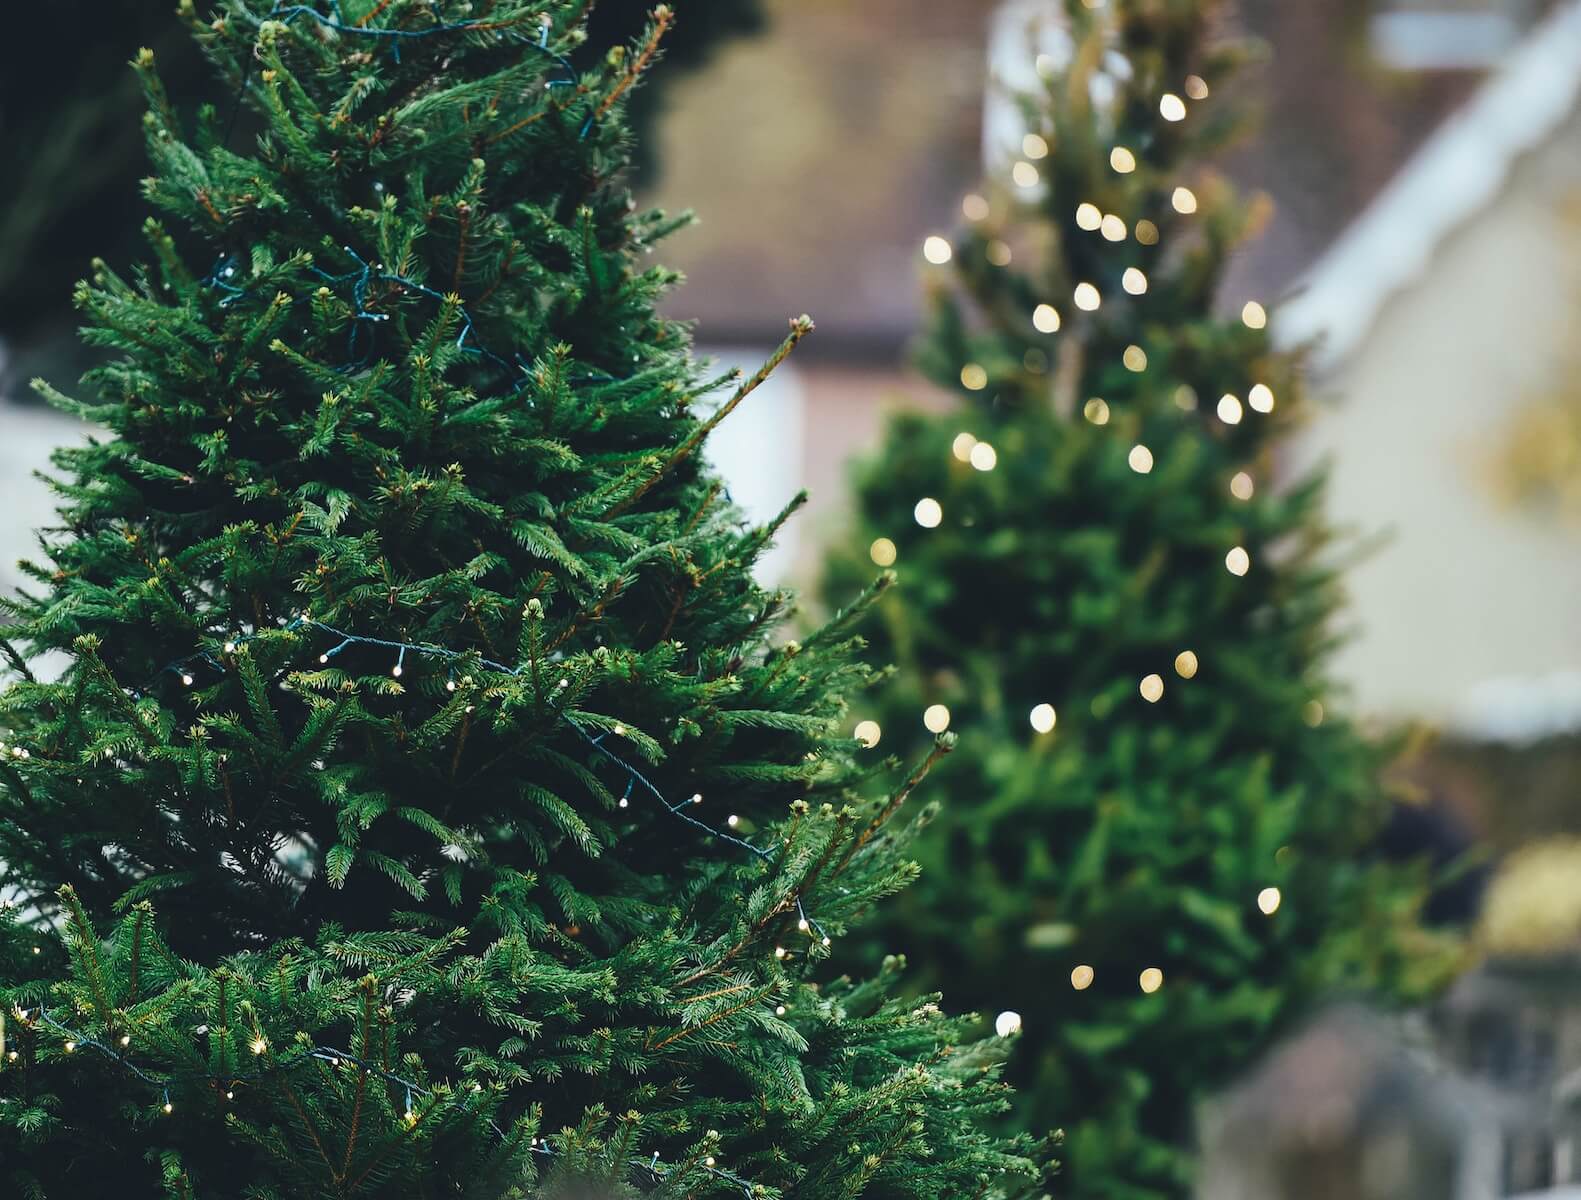 Christmas trees close-up